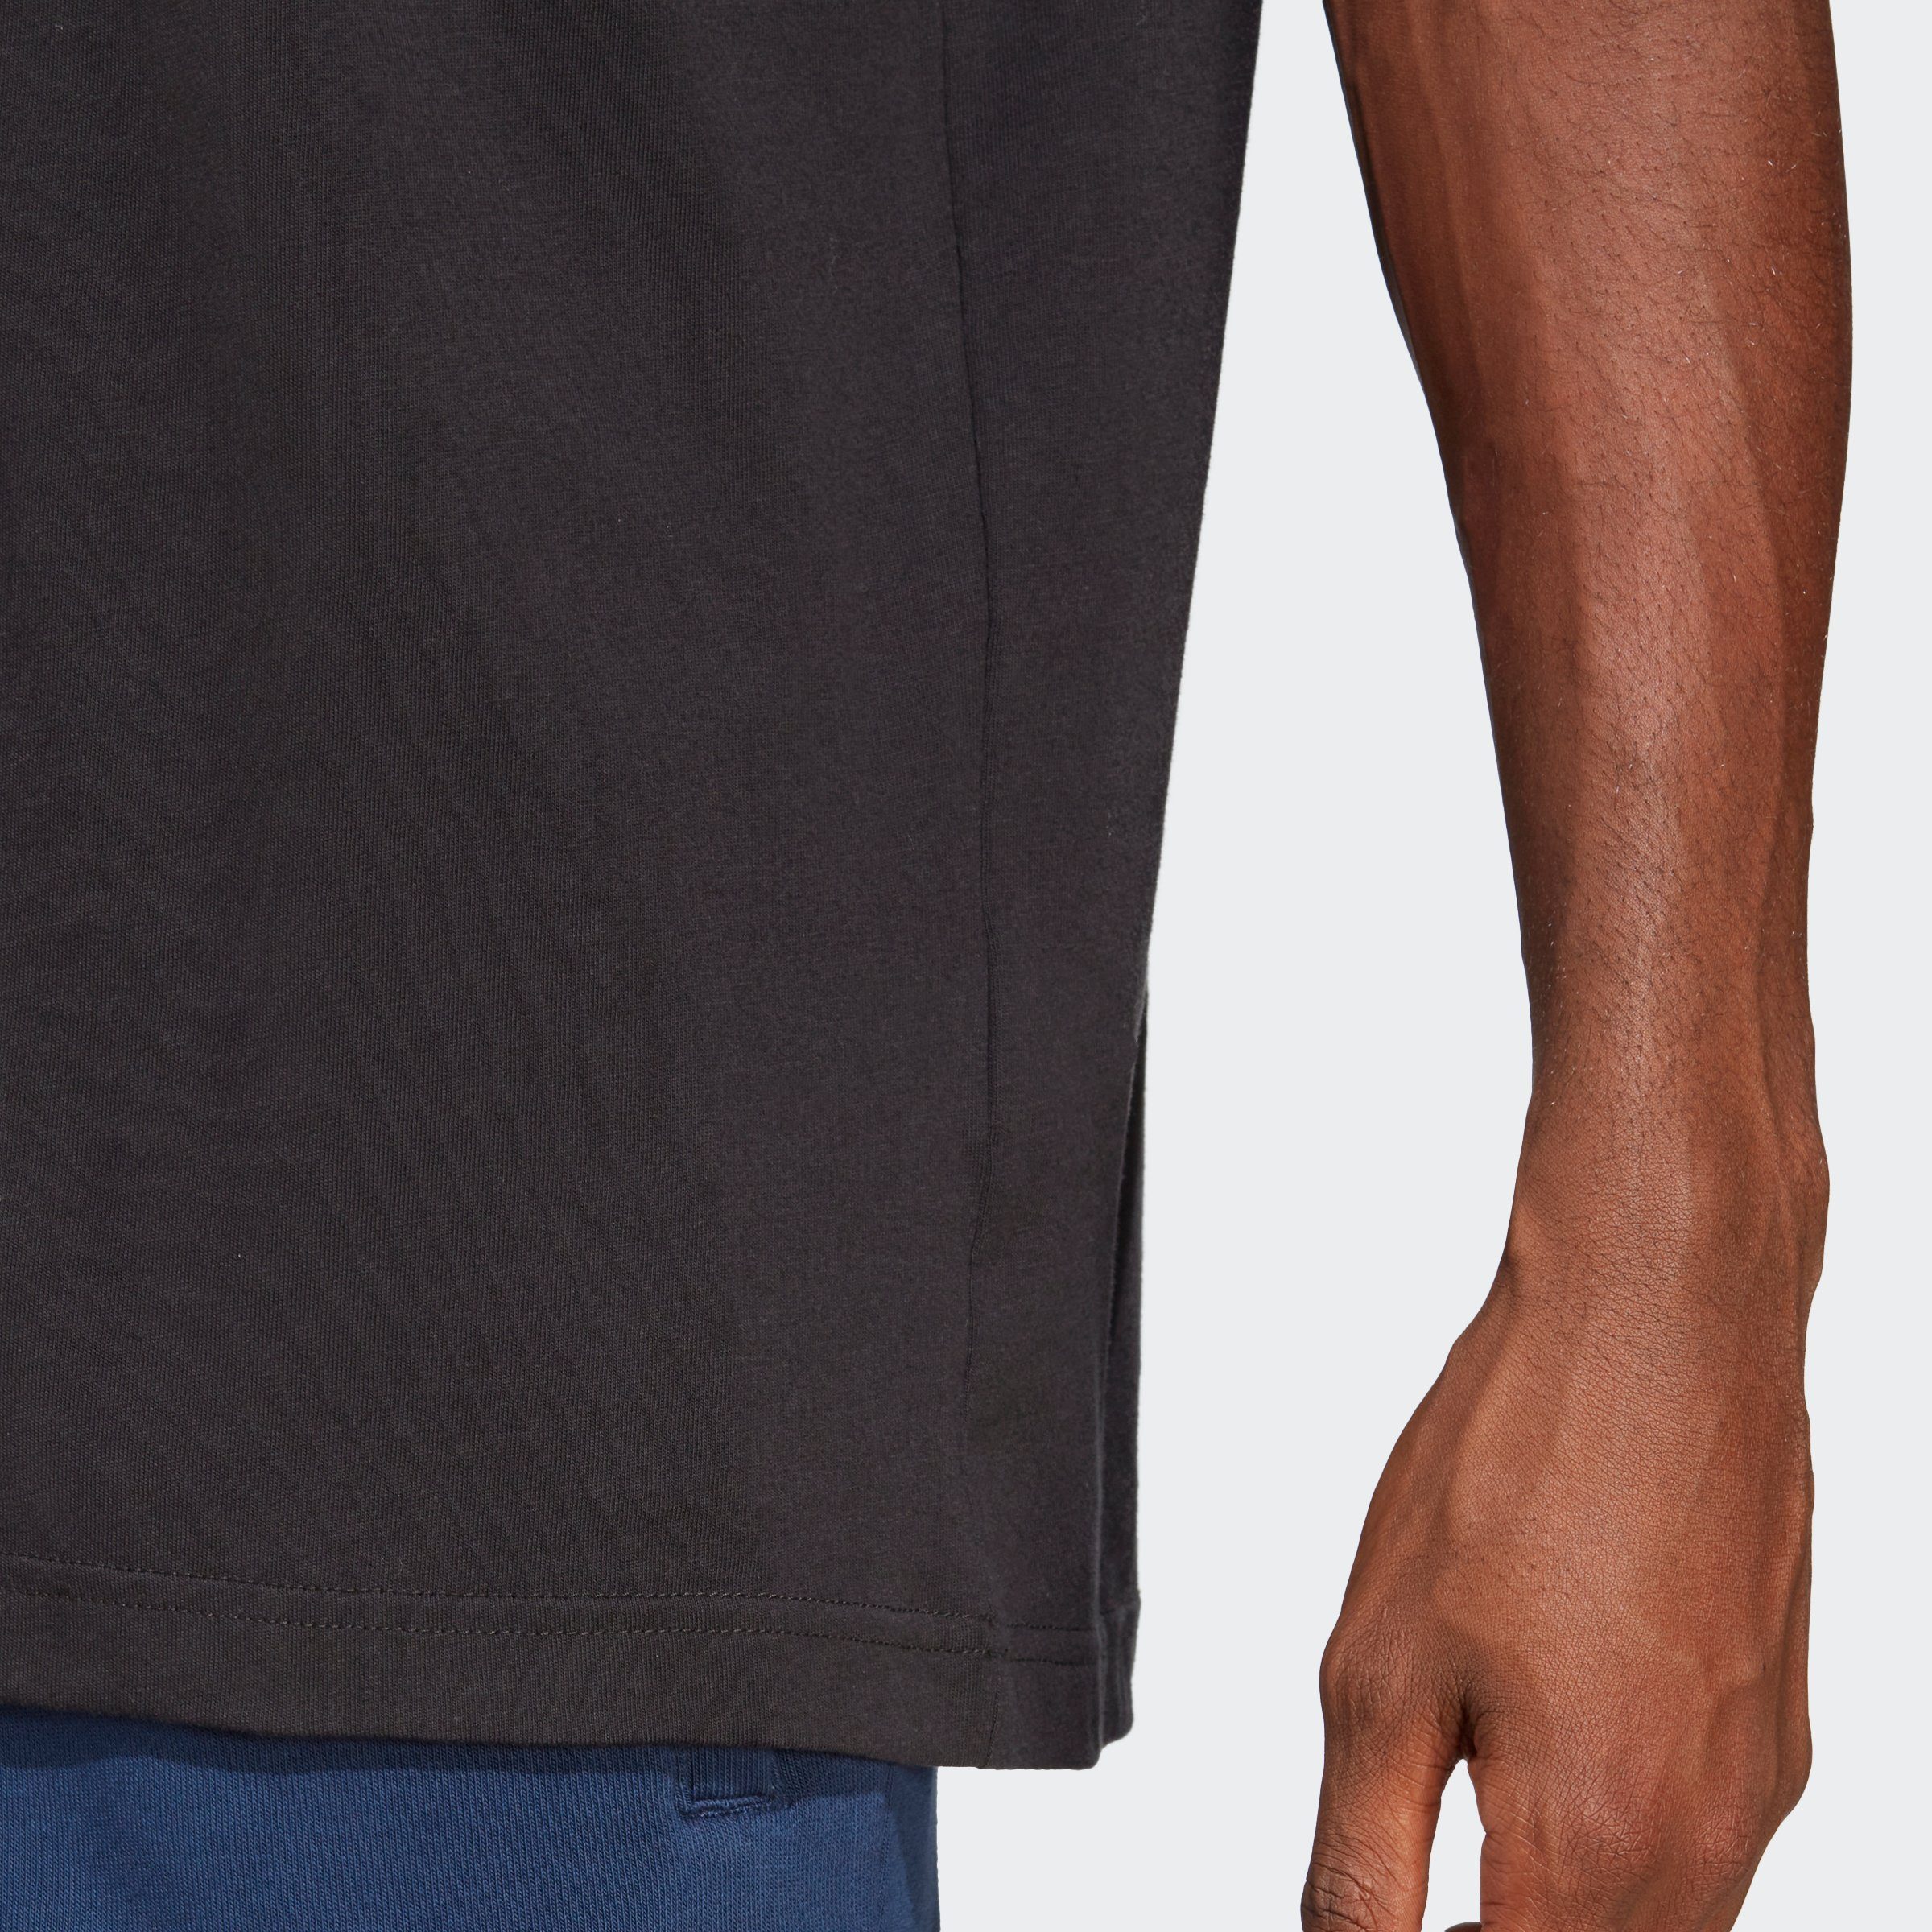 ESSENTIALS adidas Black T-Shirt Originals TREFOIL